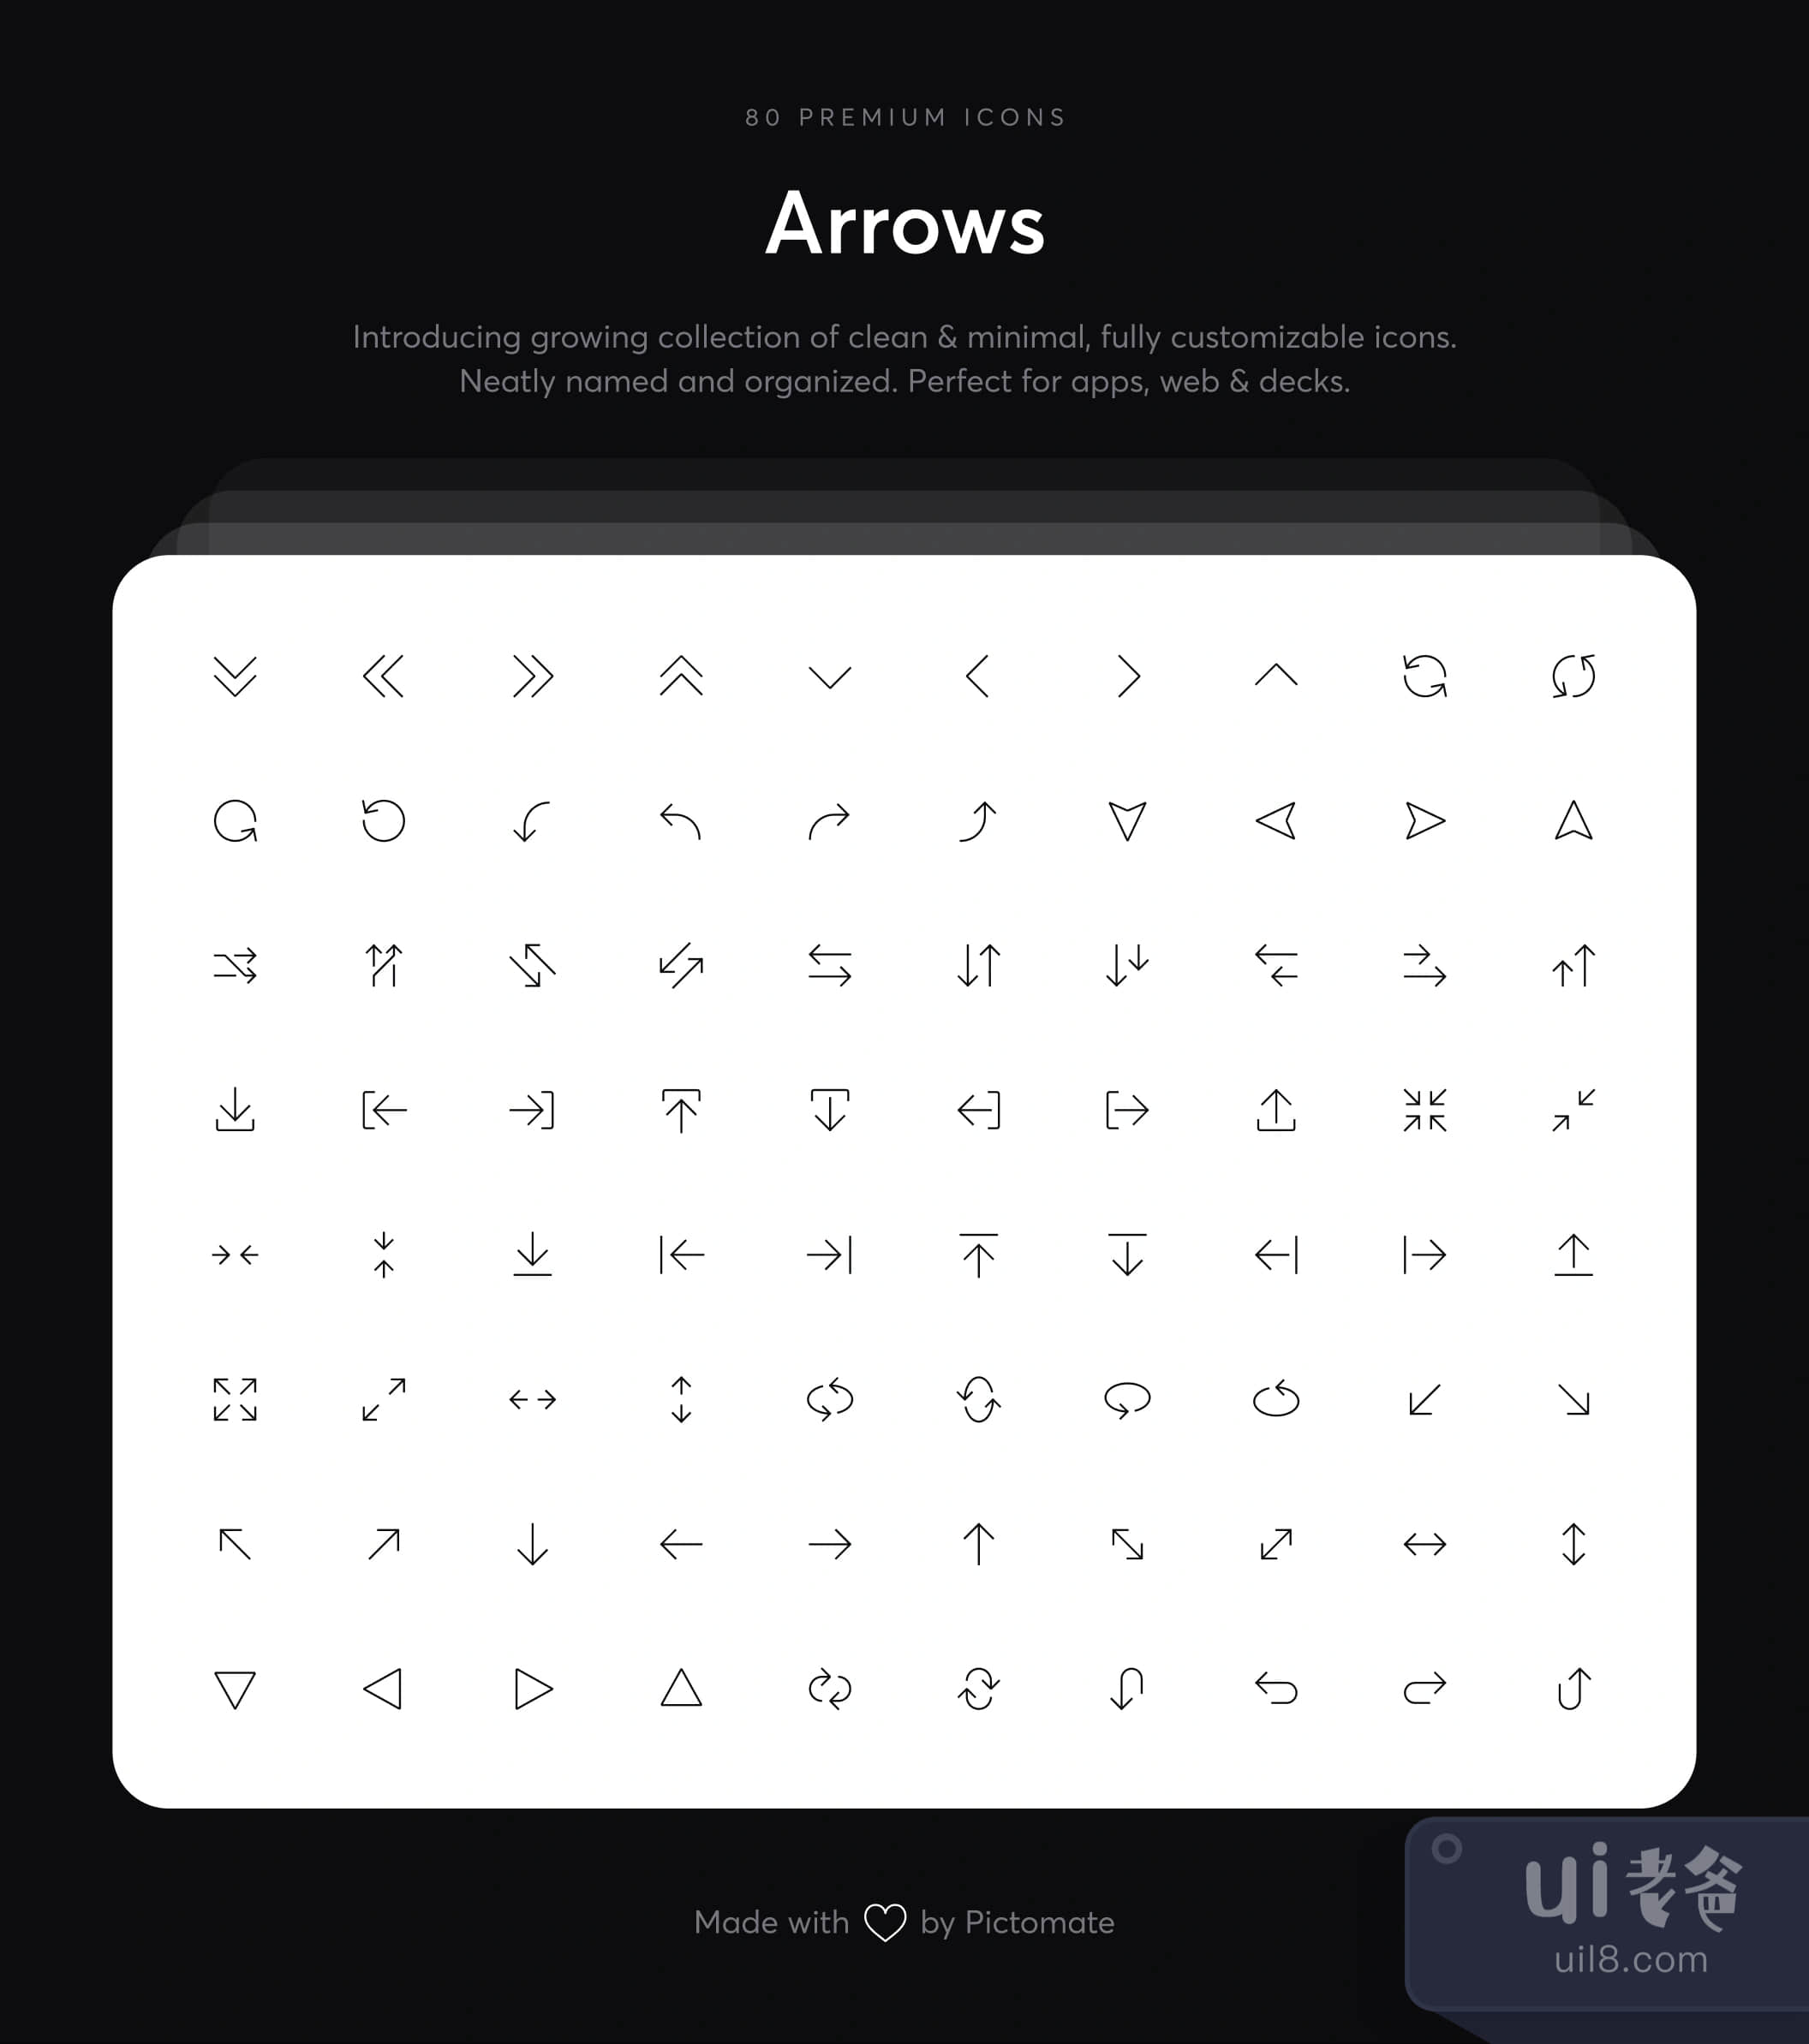 箭头 - 高级图标 (Arrows - Premium Icons)插图